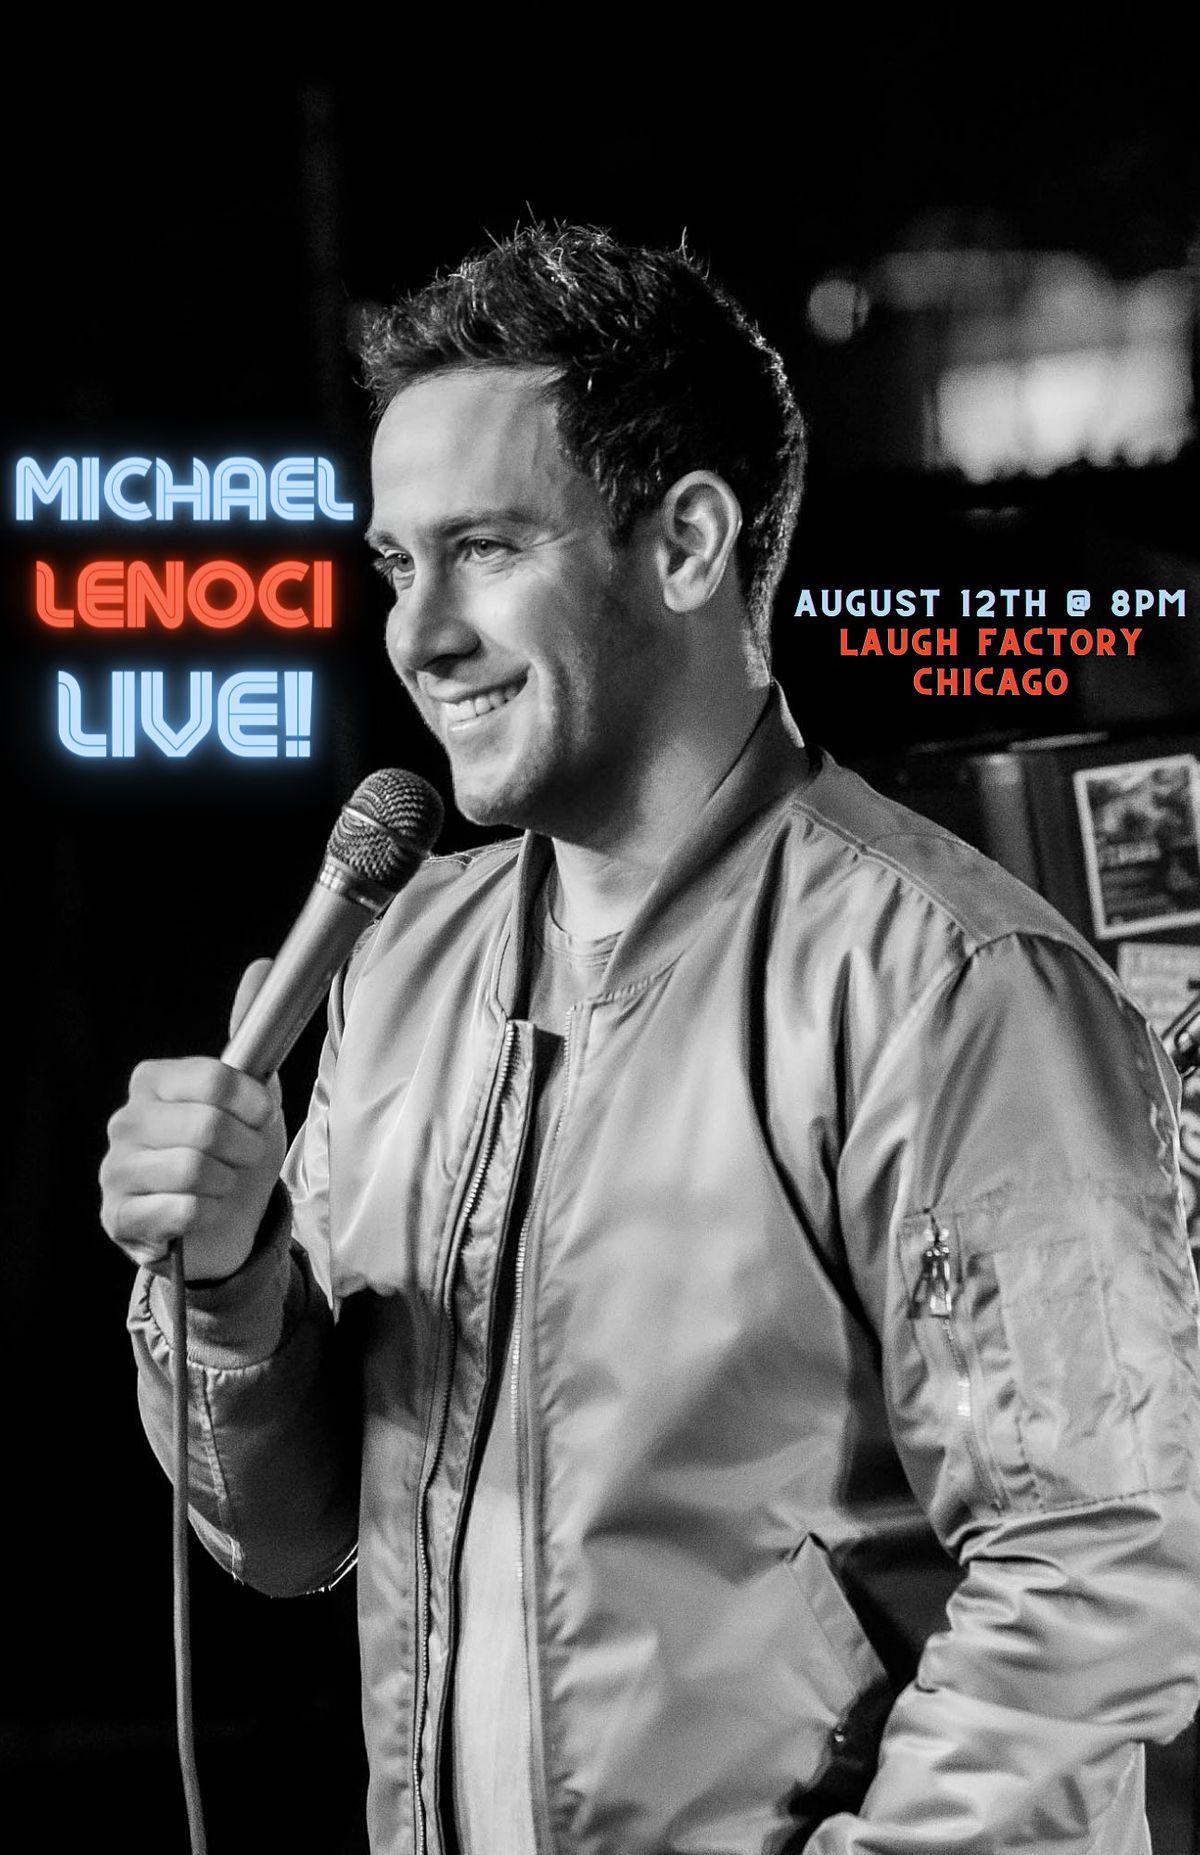 Michael Lenoci LIVE at Laugh Factory Chicago